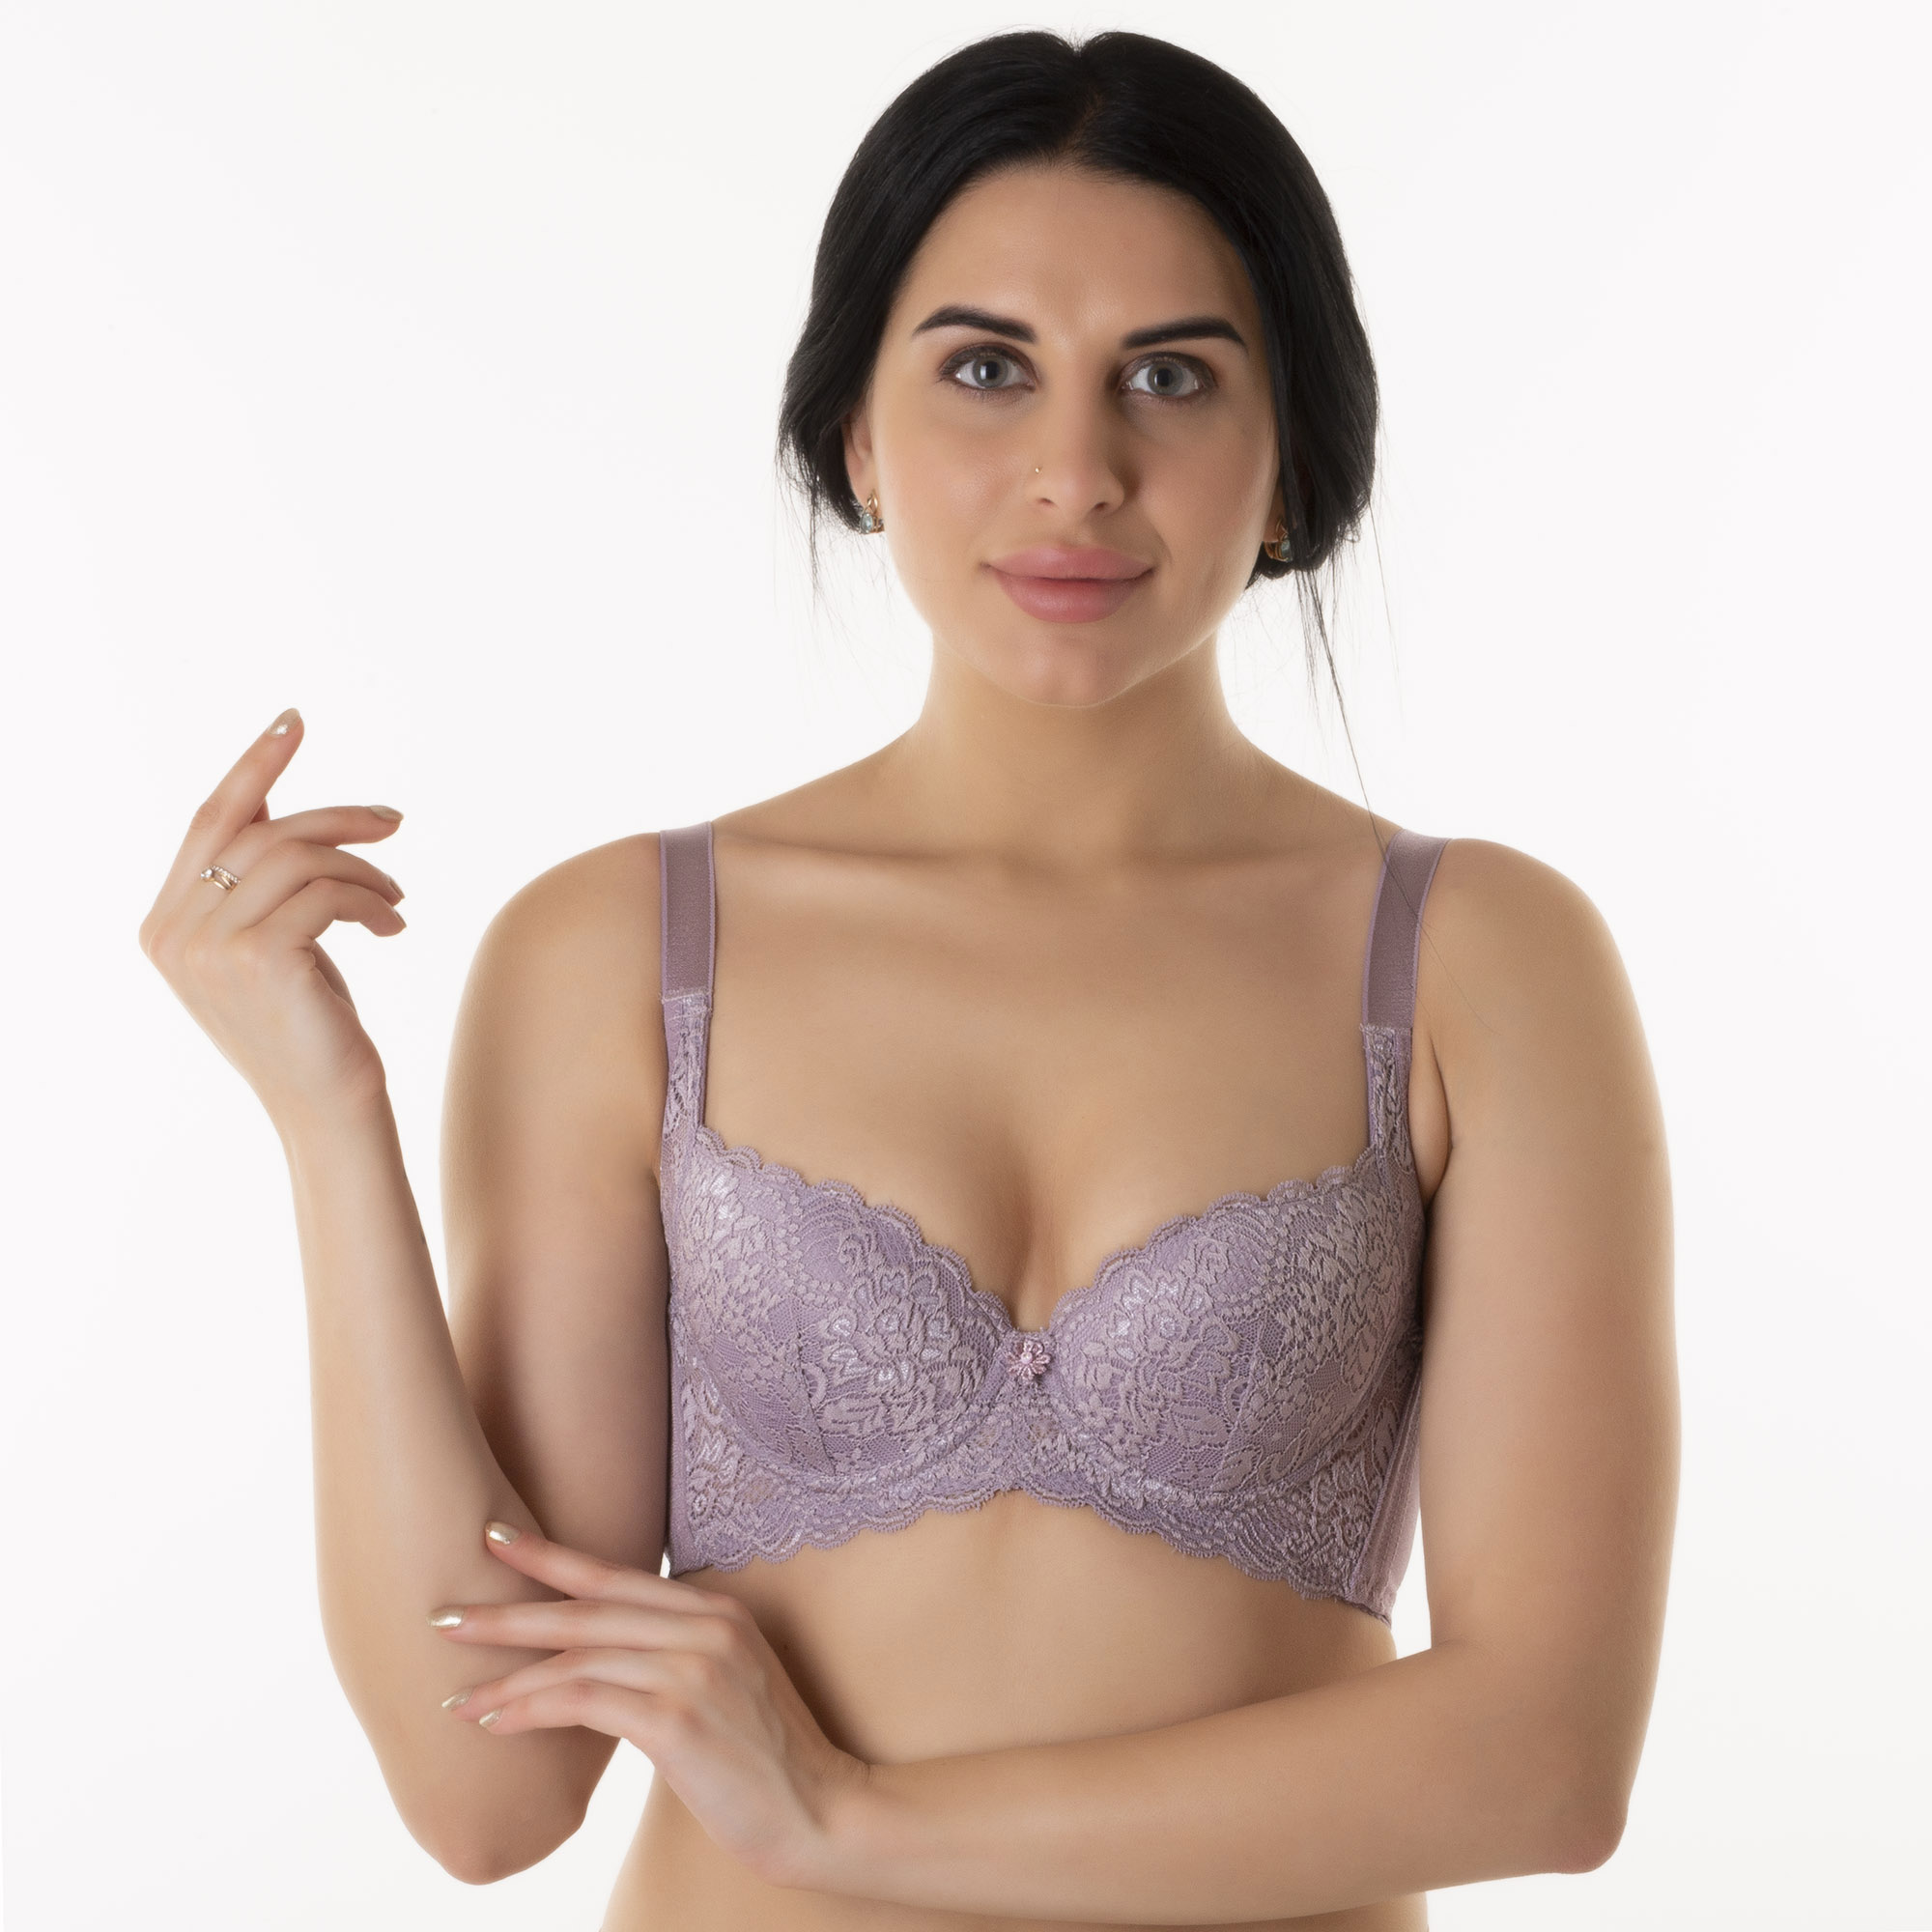 ANGOOL Minimizer Bras for Women Heavy Breast Push Up Balconette